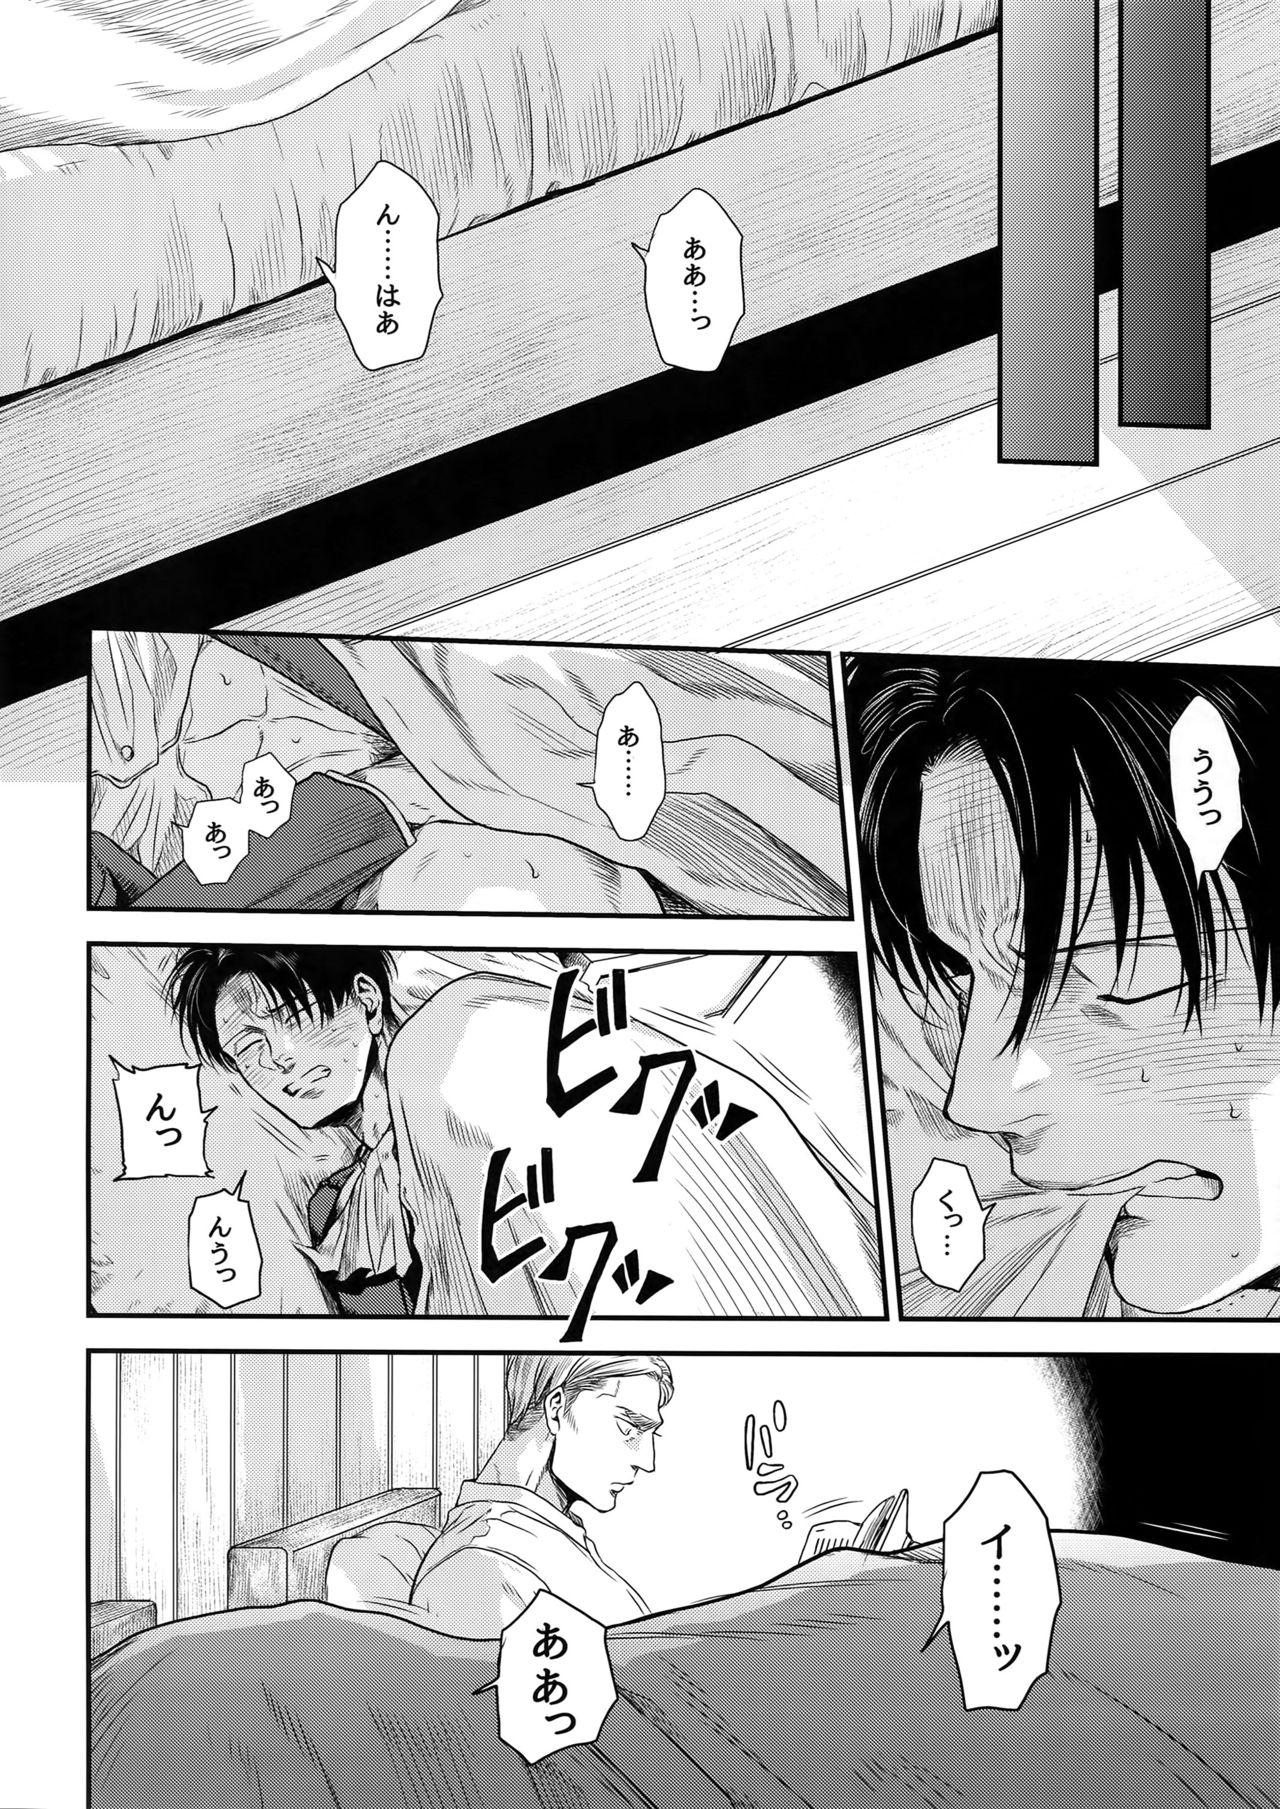 Sexo Anal continuance - Shingeki no kyojin Bedroom - Page 11